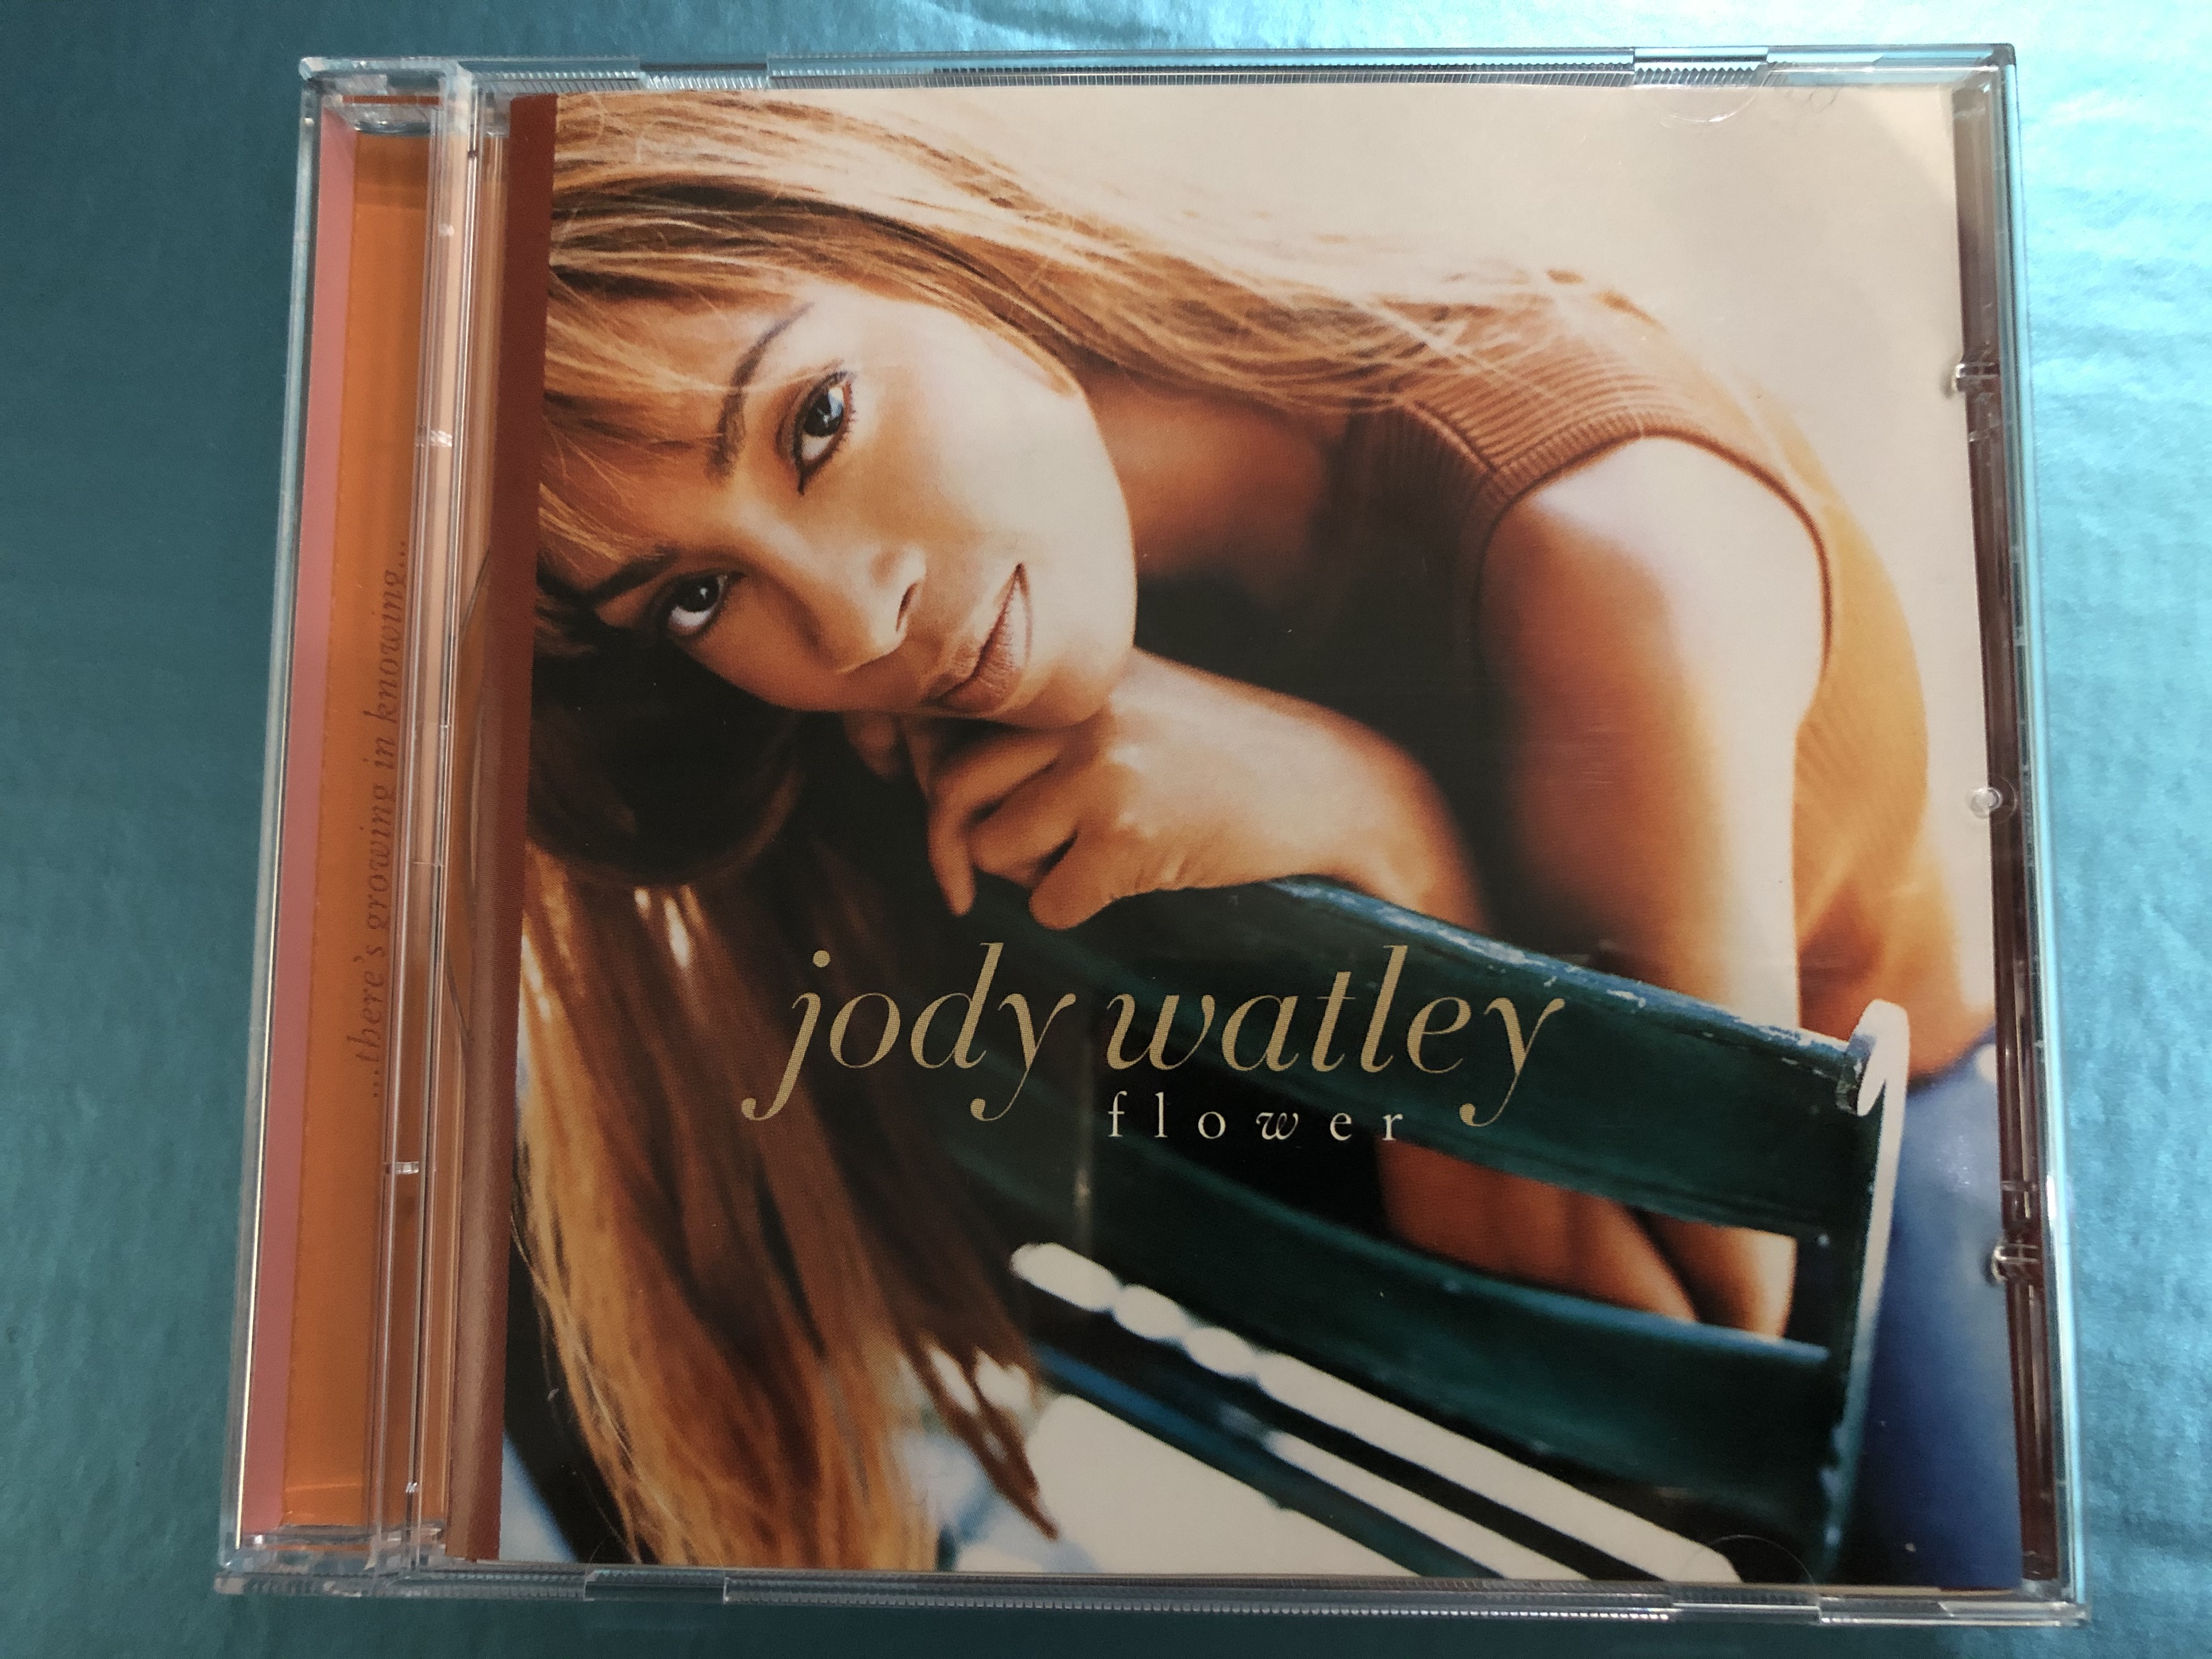 jody-watley-flower-atlantic-audio-cd-1998-7567-83087-2-1-.jpg